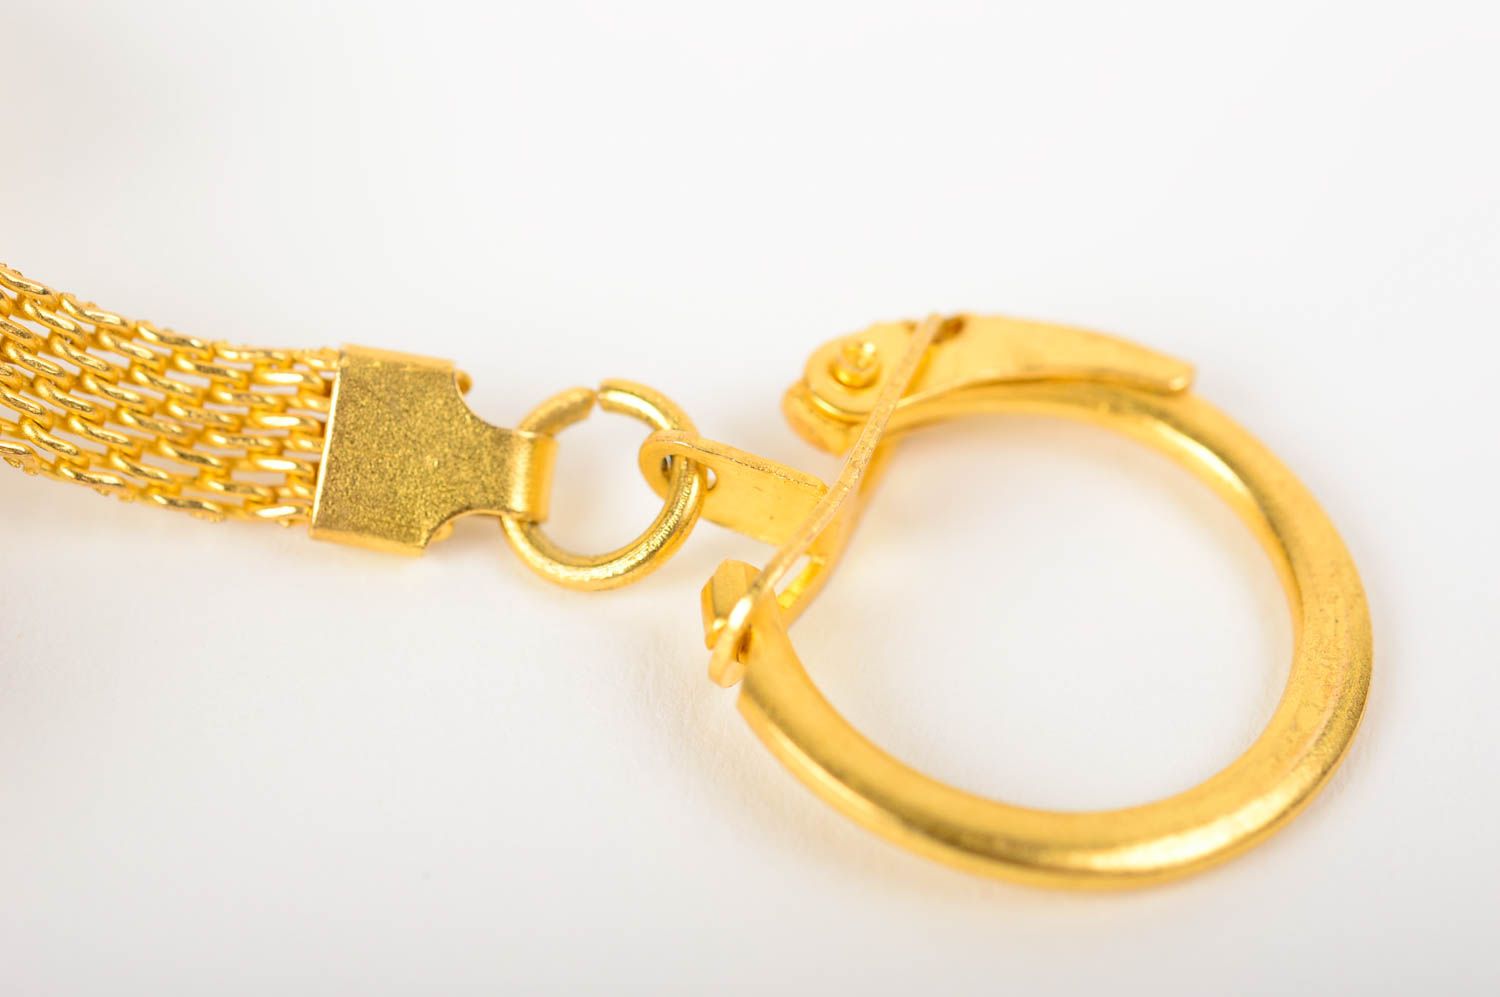 Textil Schlüsselanhänger Blatt in Gelb originell grell handmade aus Filz foto 5